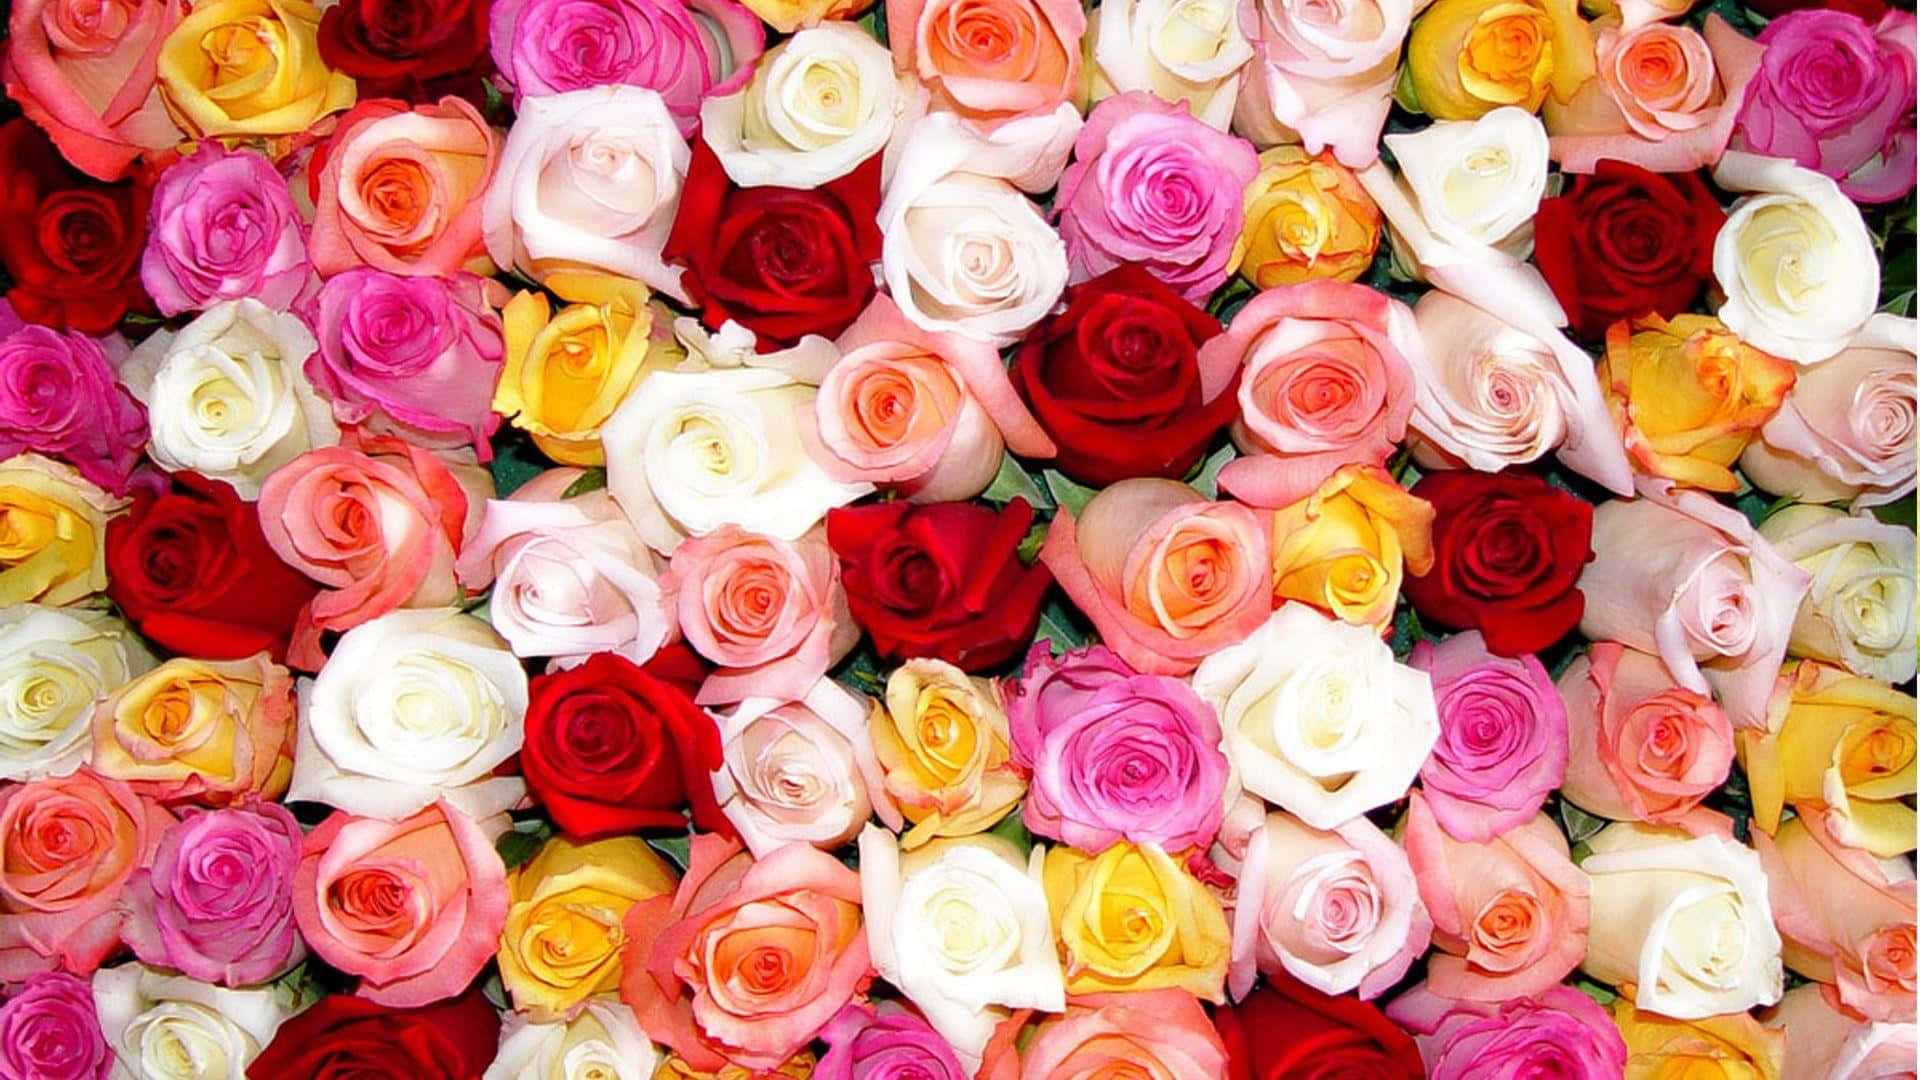 Freshly Grown Roses with Beautiful Petals